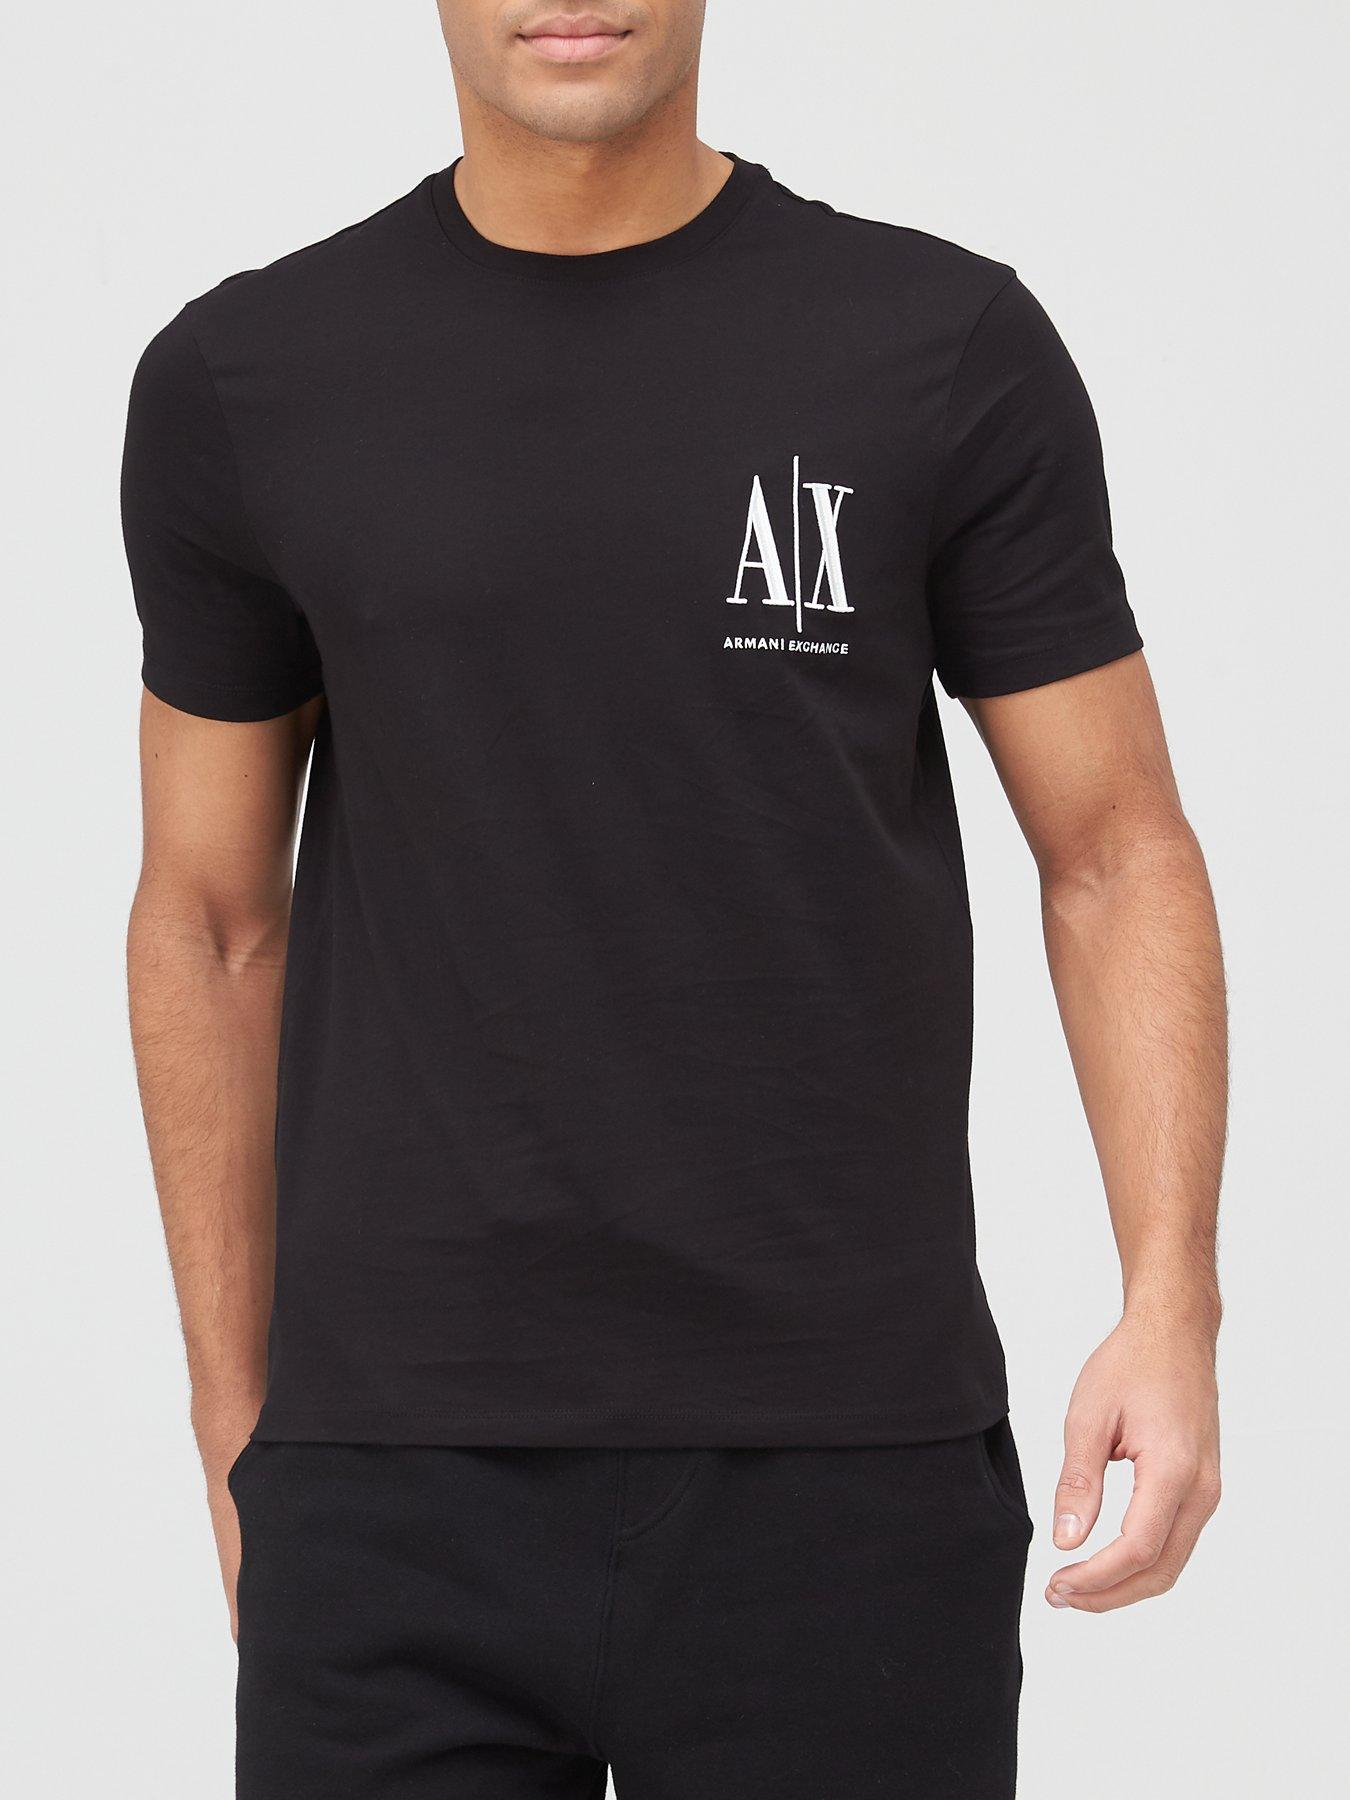 Armani Exchange Logo T-Shirt